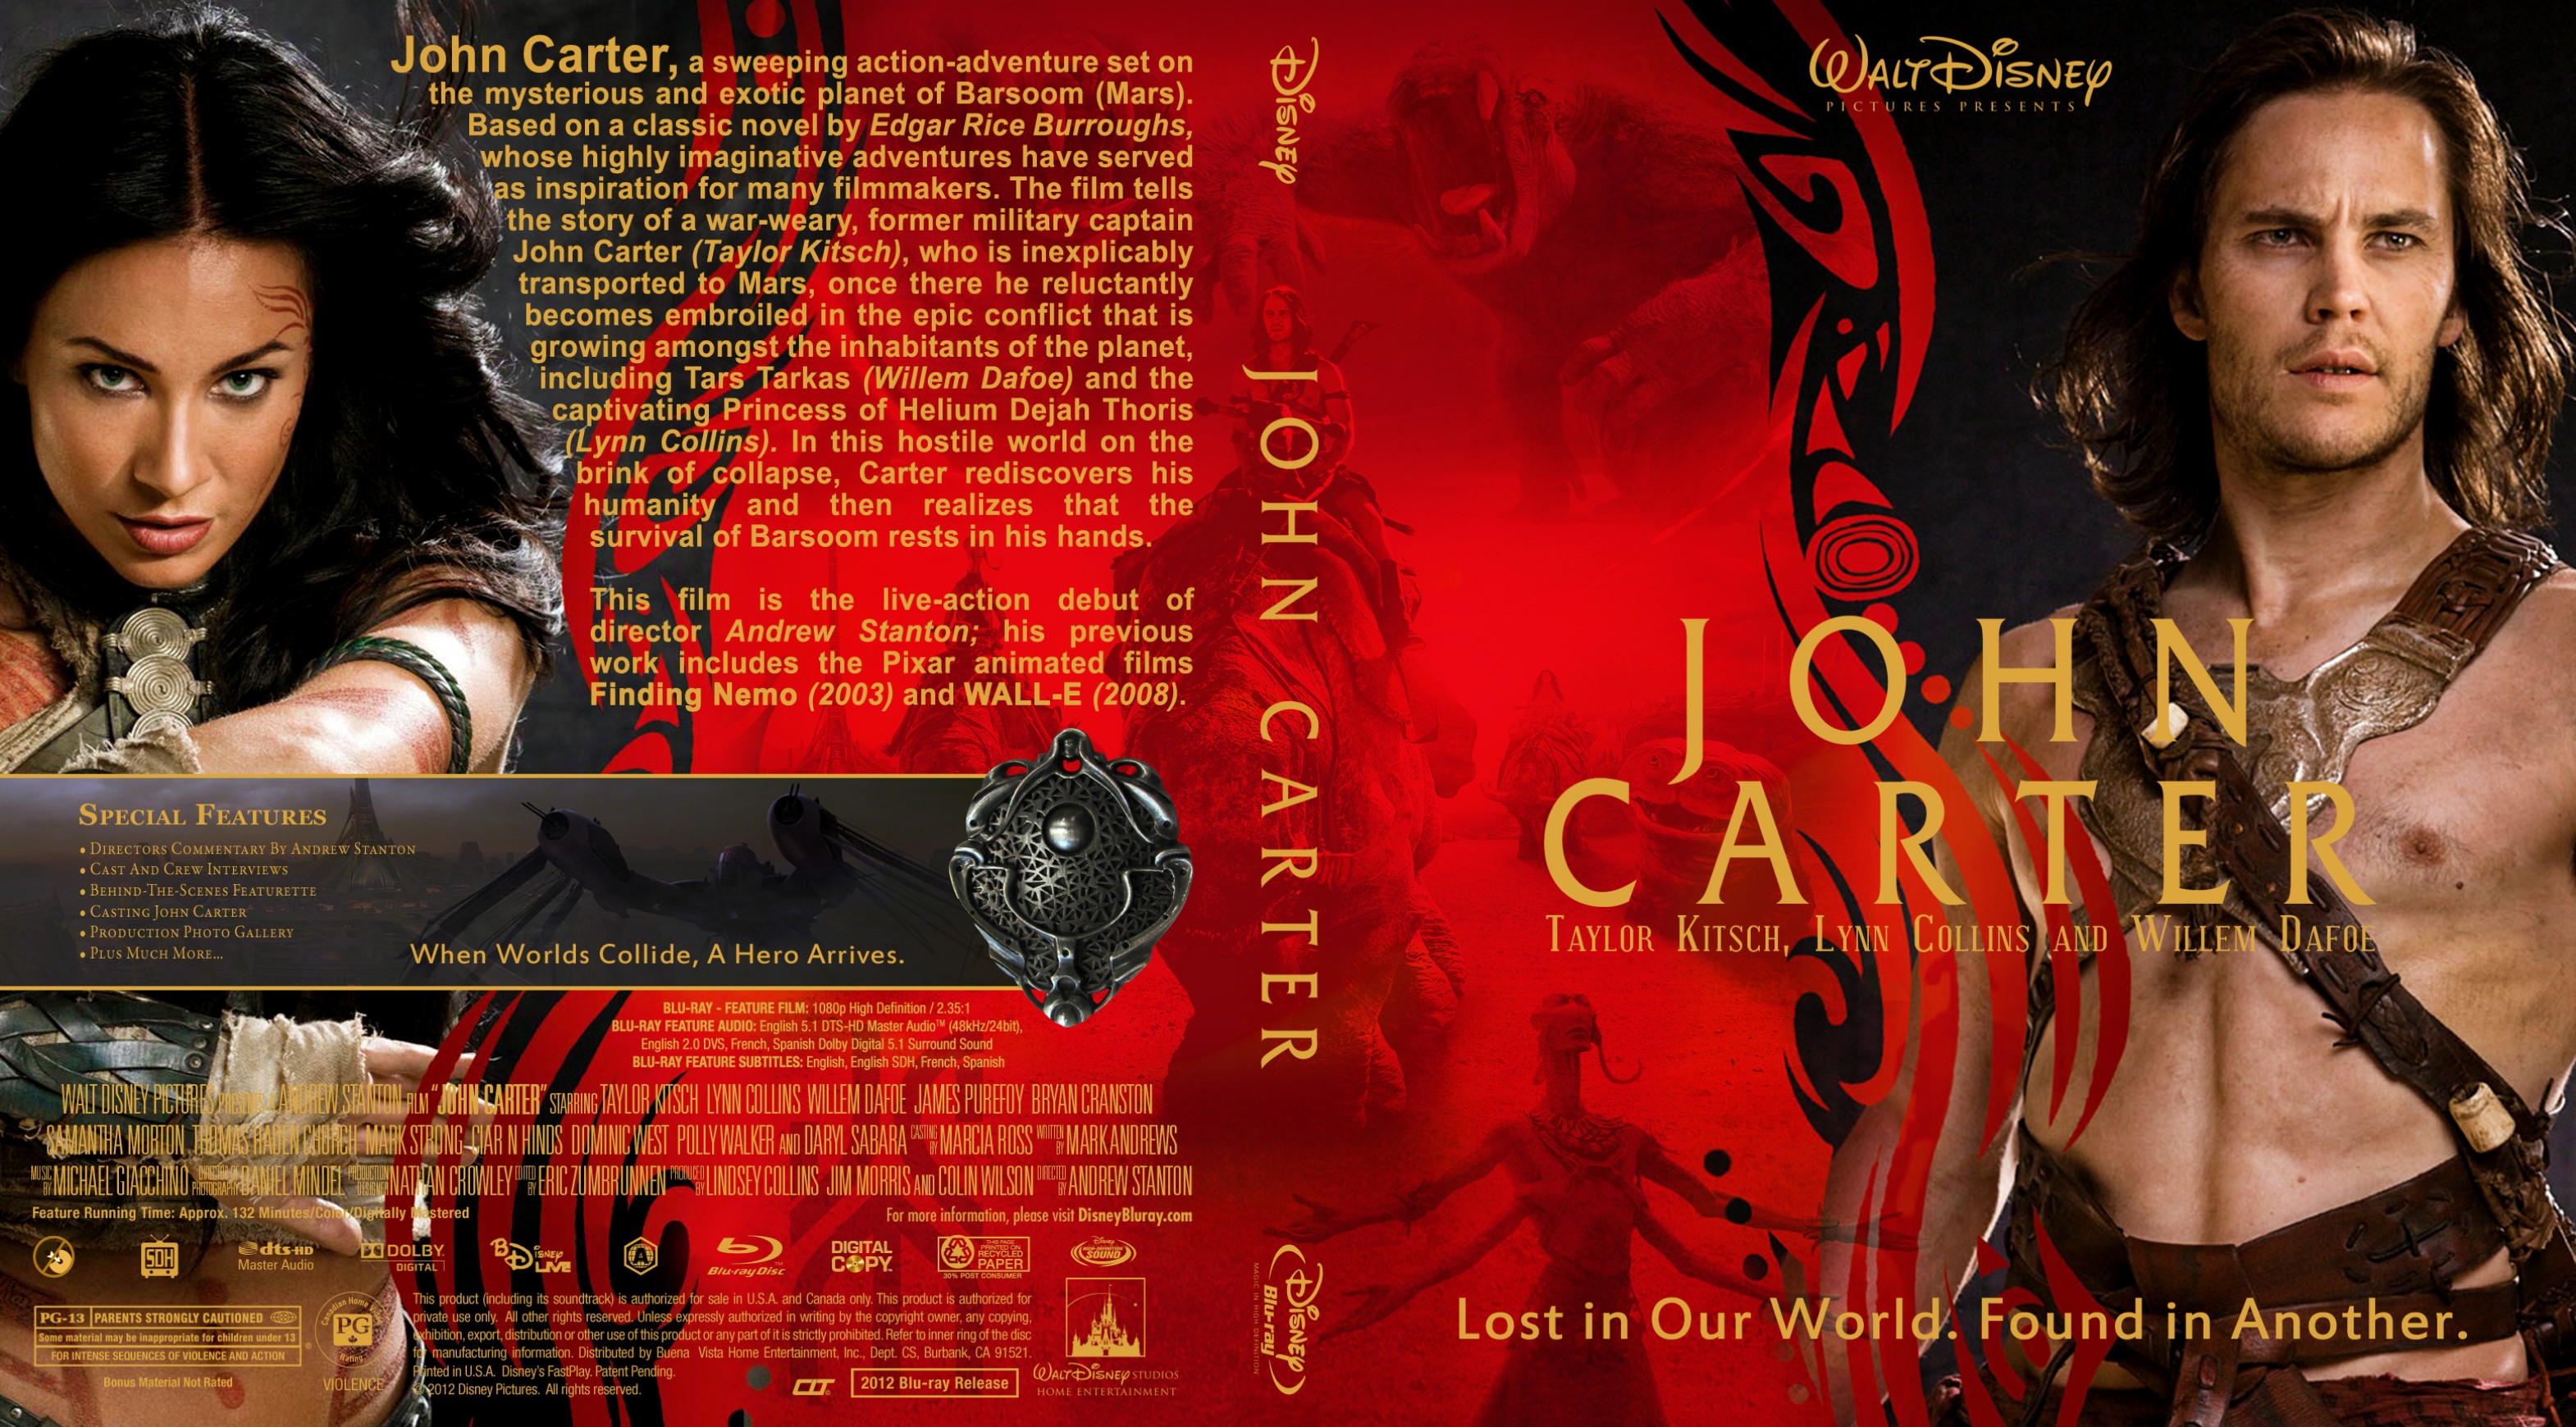 Has found another. Джон Картер (2012) Blu ray Cover. Тейлор Китч Джон Картер. Обложка для двд John Carter.